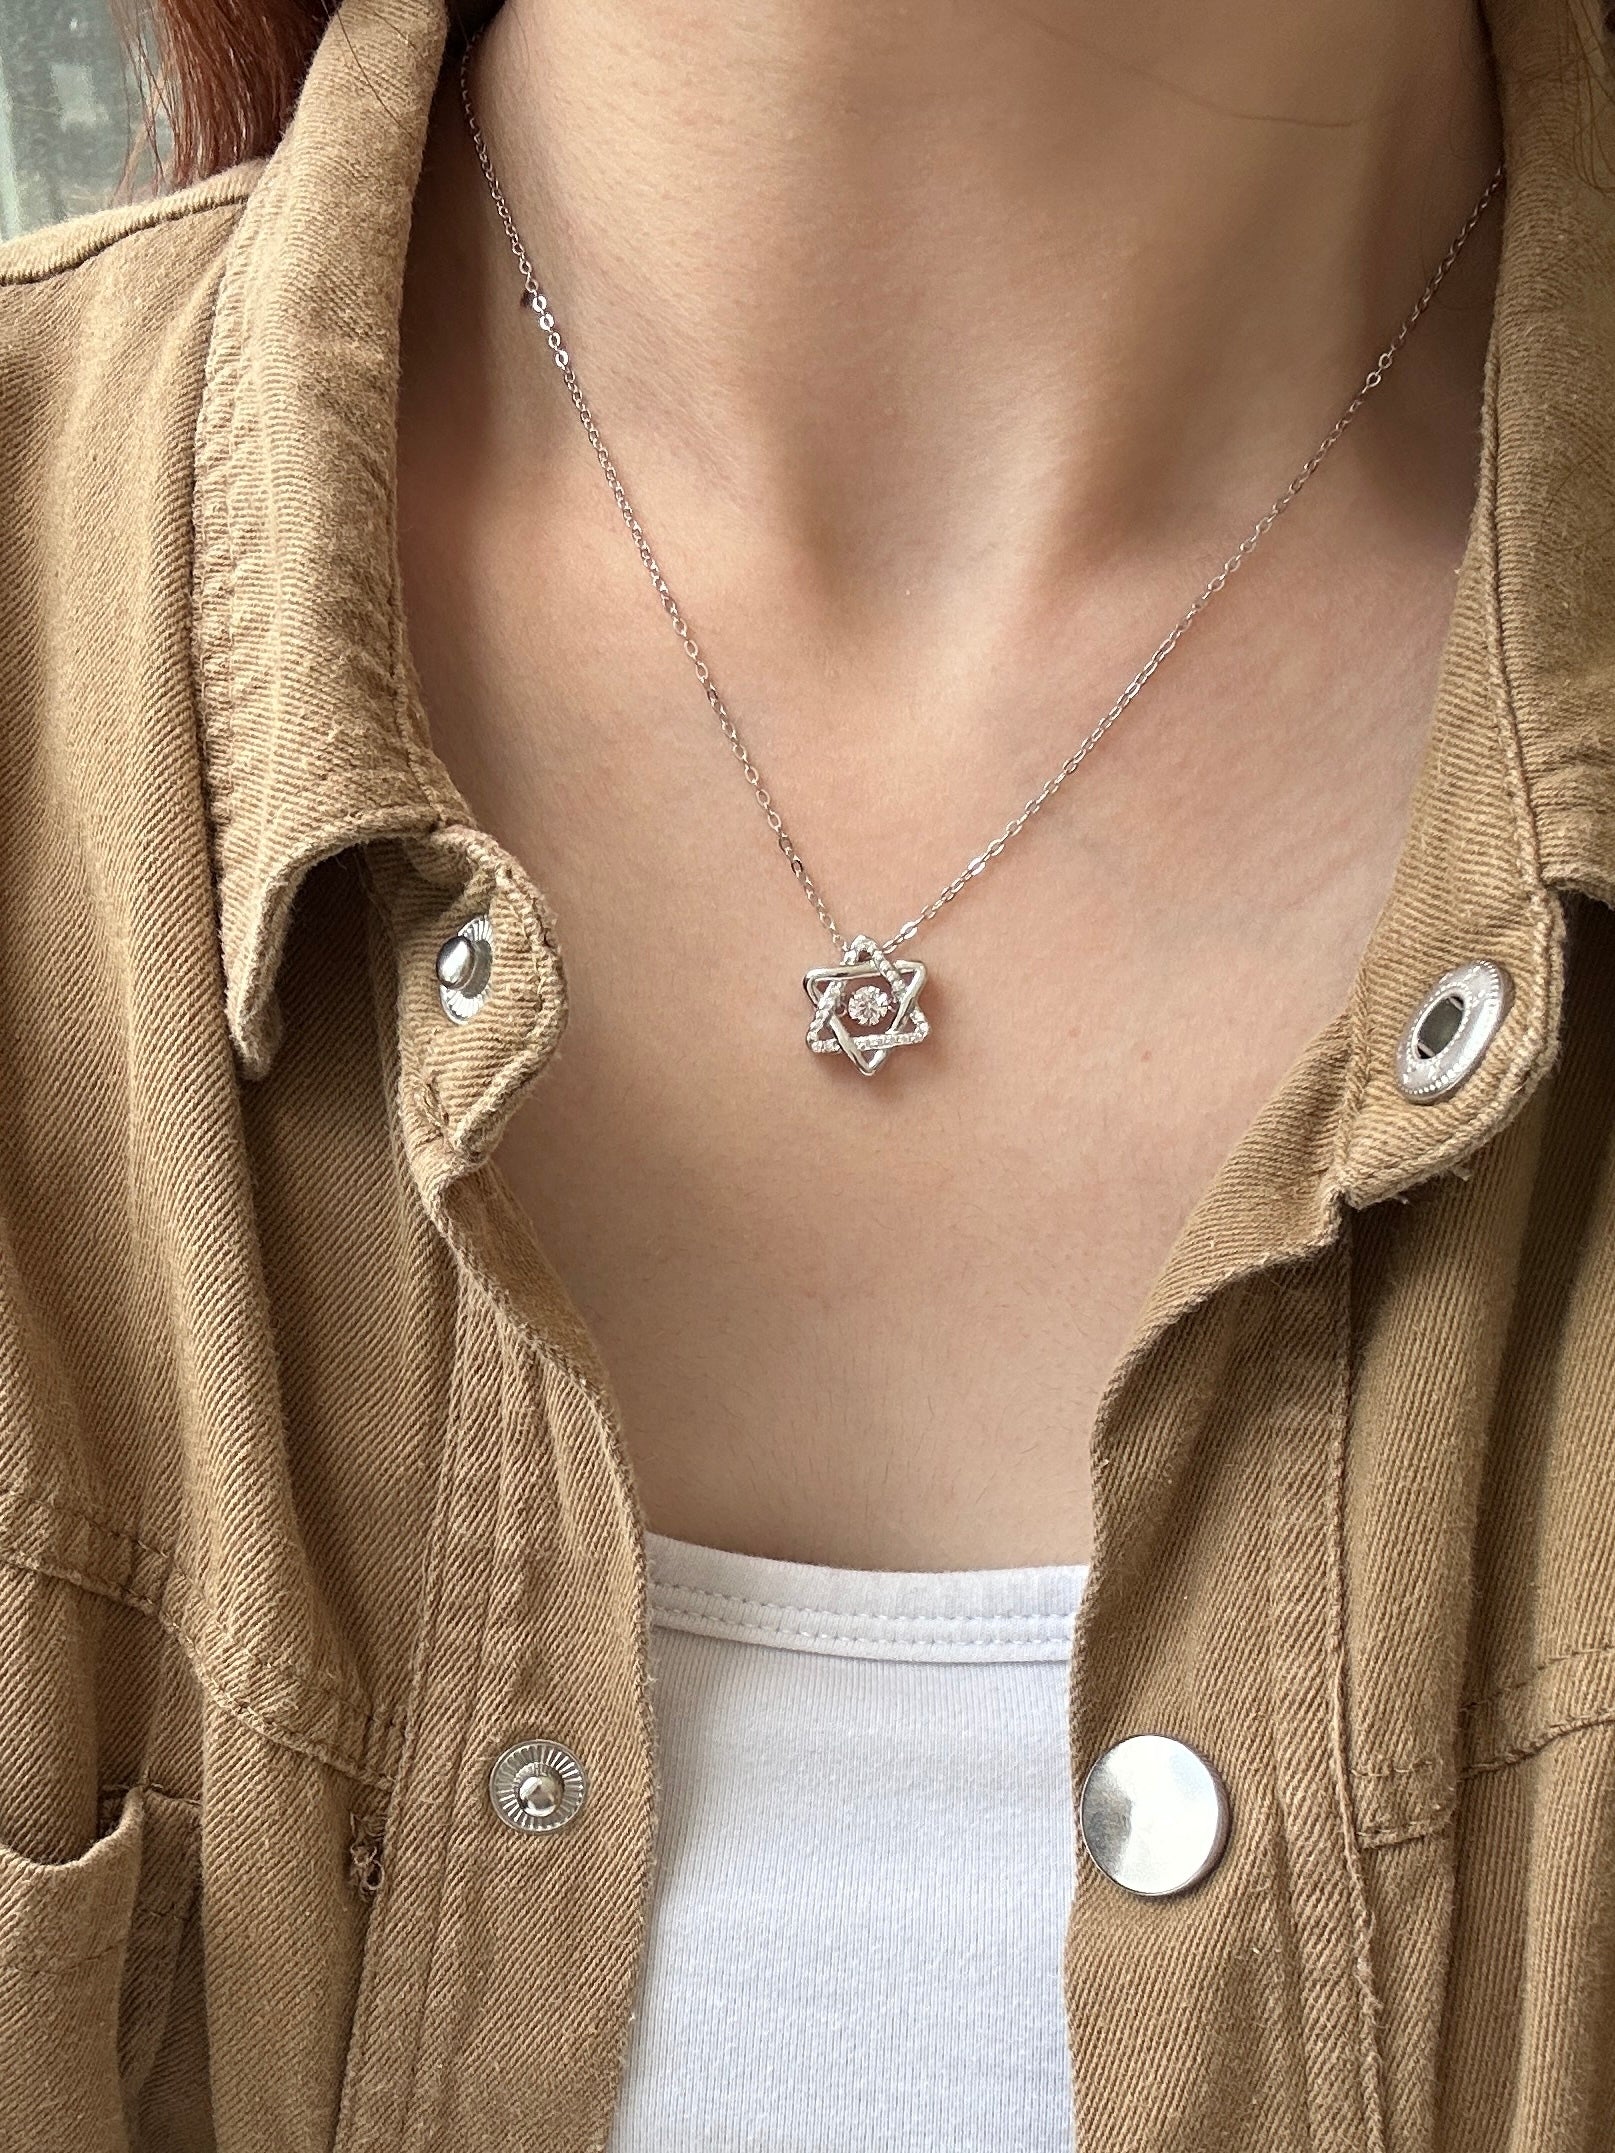 David's Star Necklace